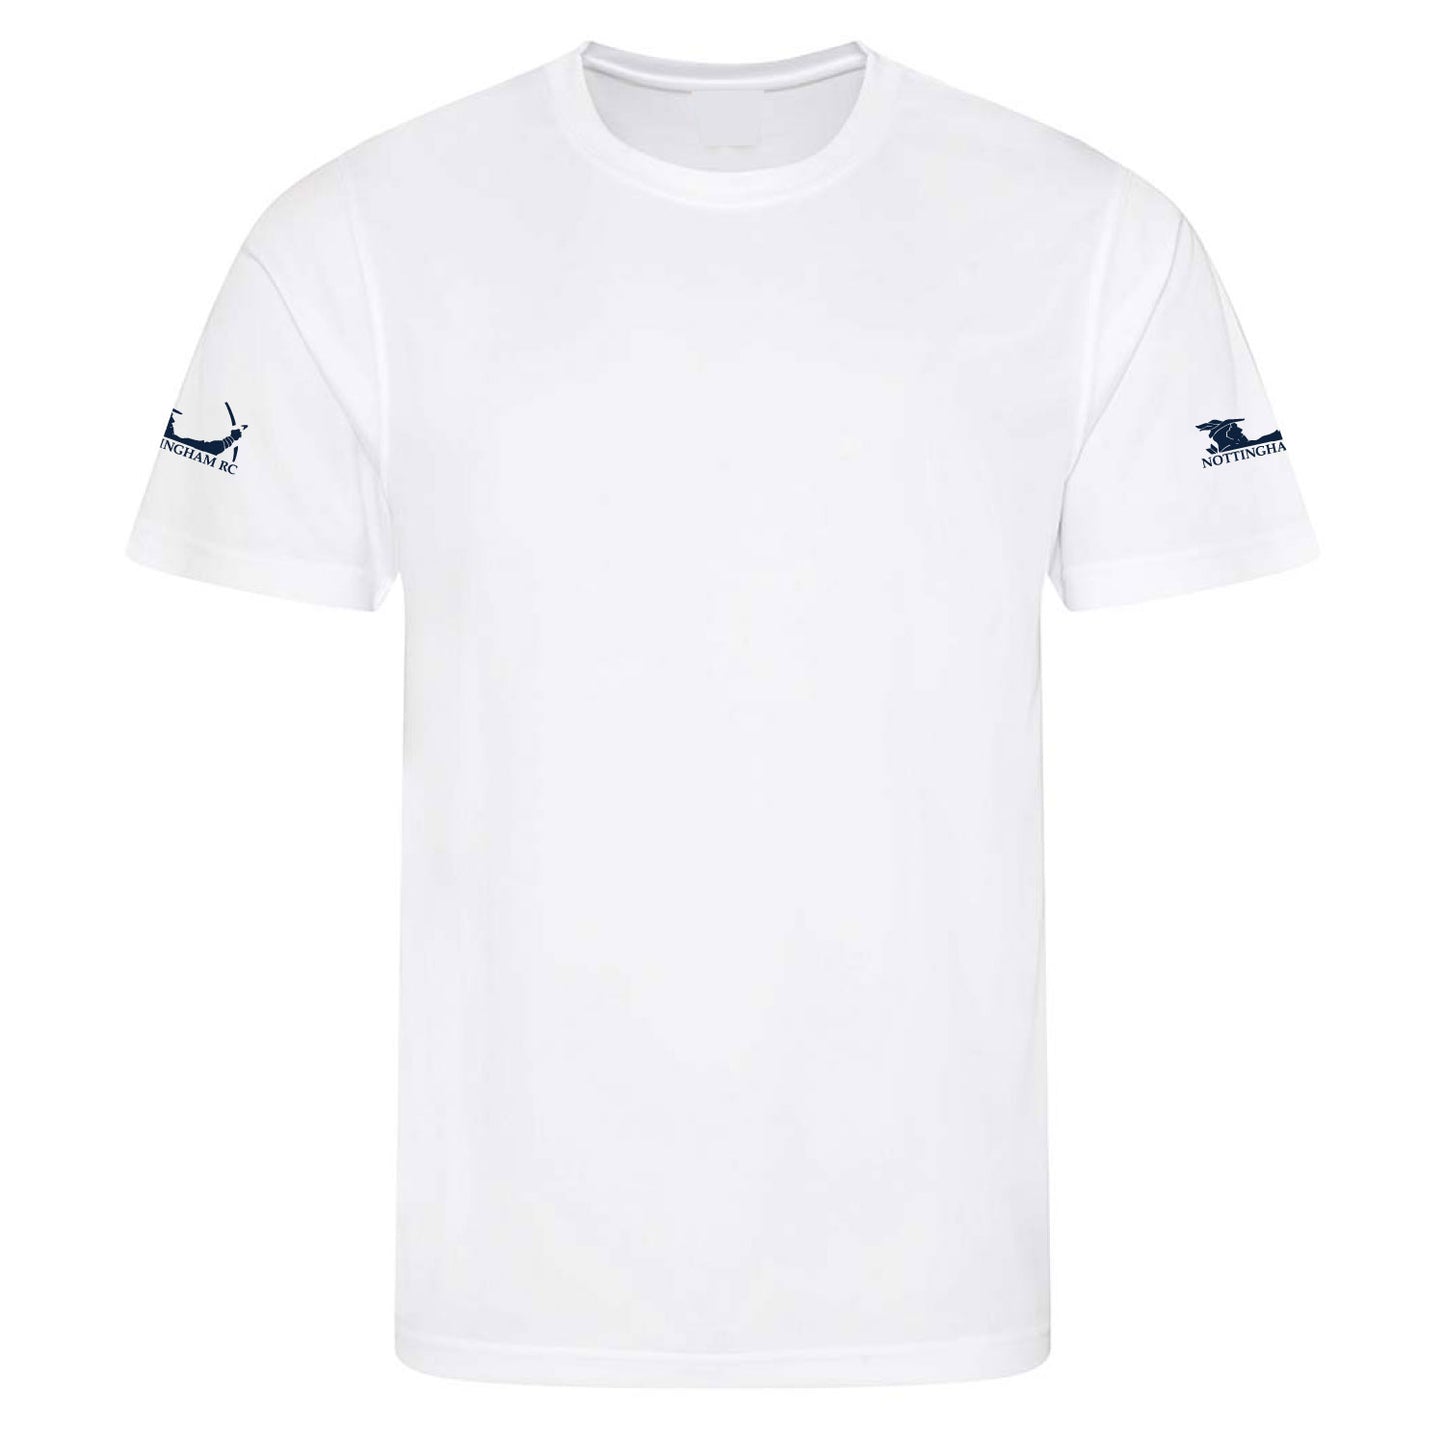 Nottingham RC T-Shirt